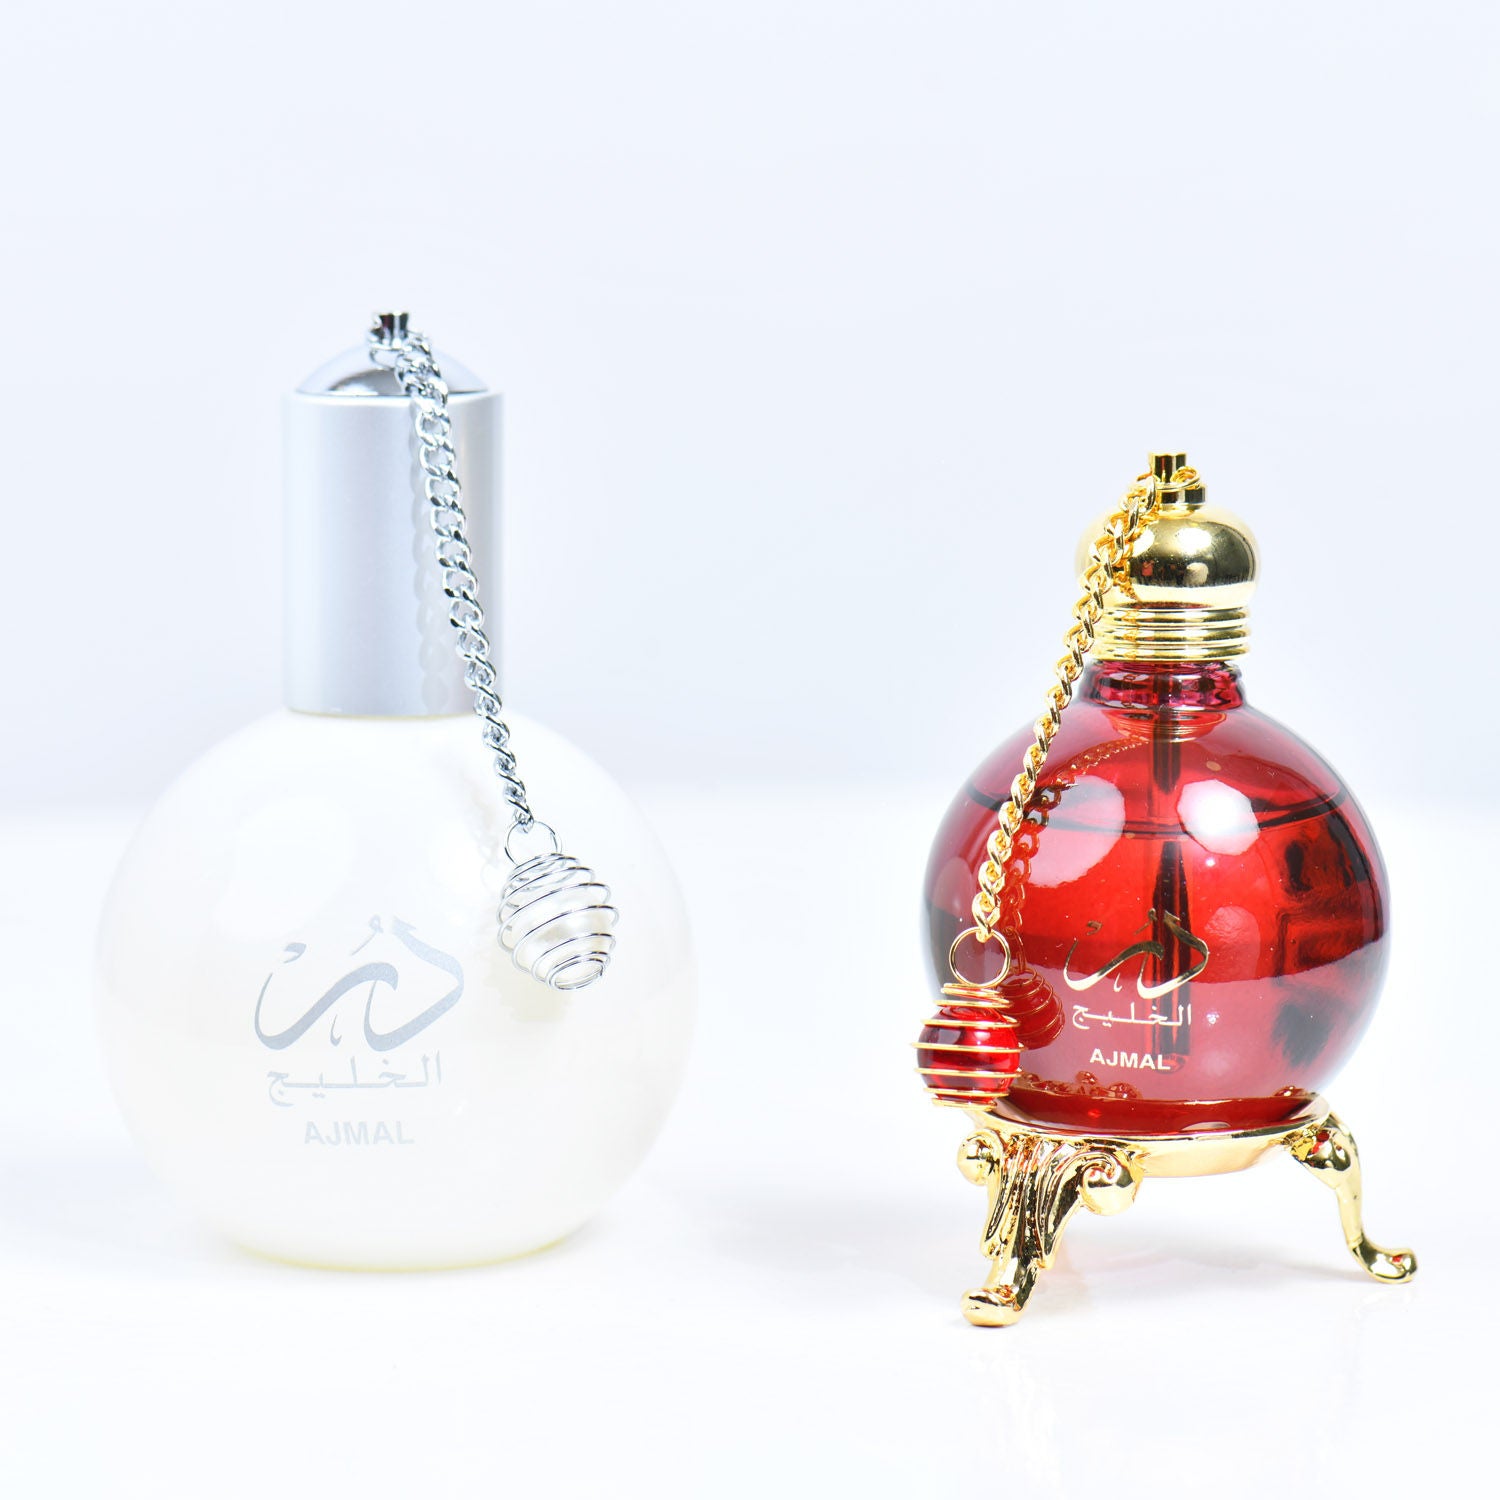 Red Tulips with Dur Al Khaleej Gift Box of Ajmal Perfumes